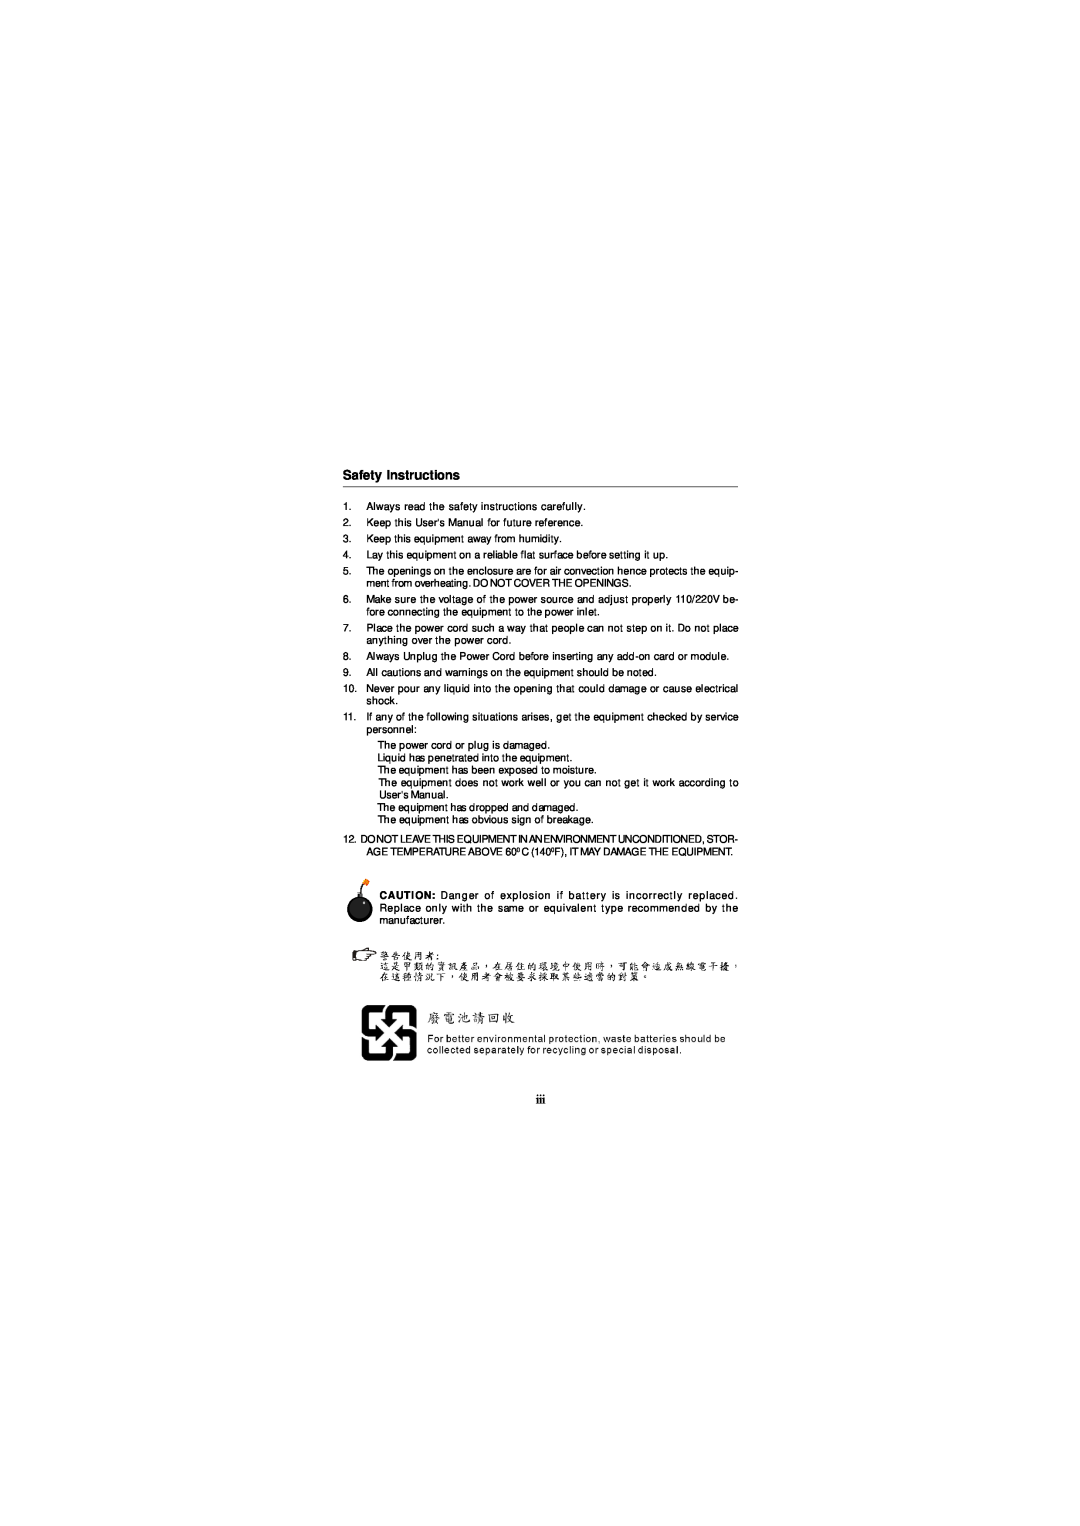 Intel IM-Q35 Series manual Safety Instructions 